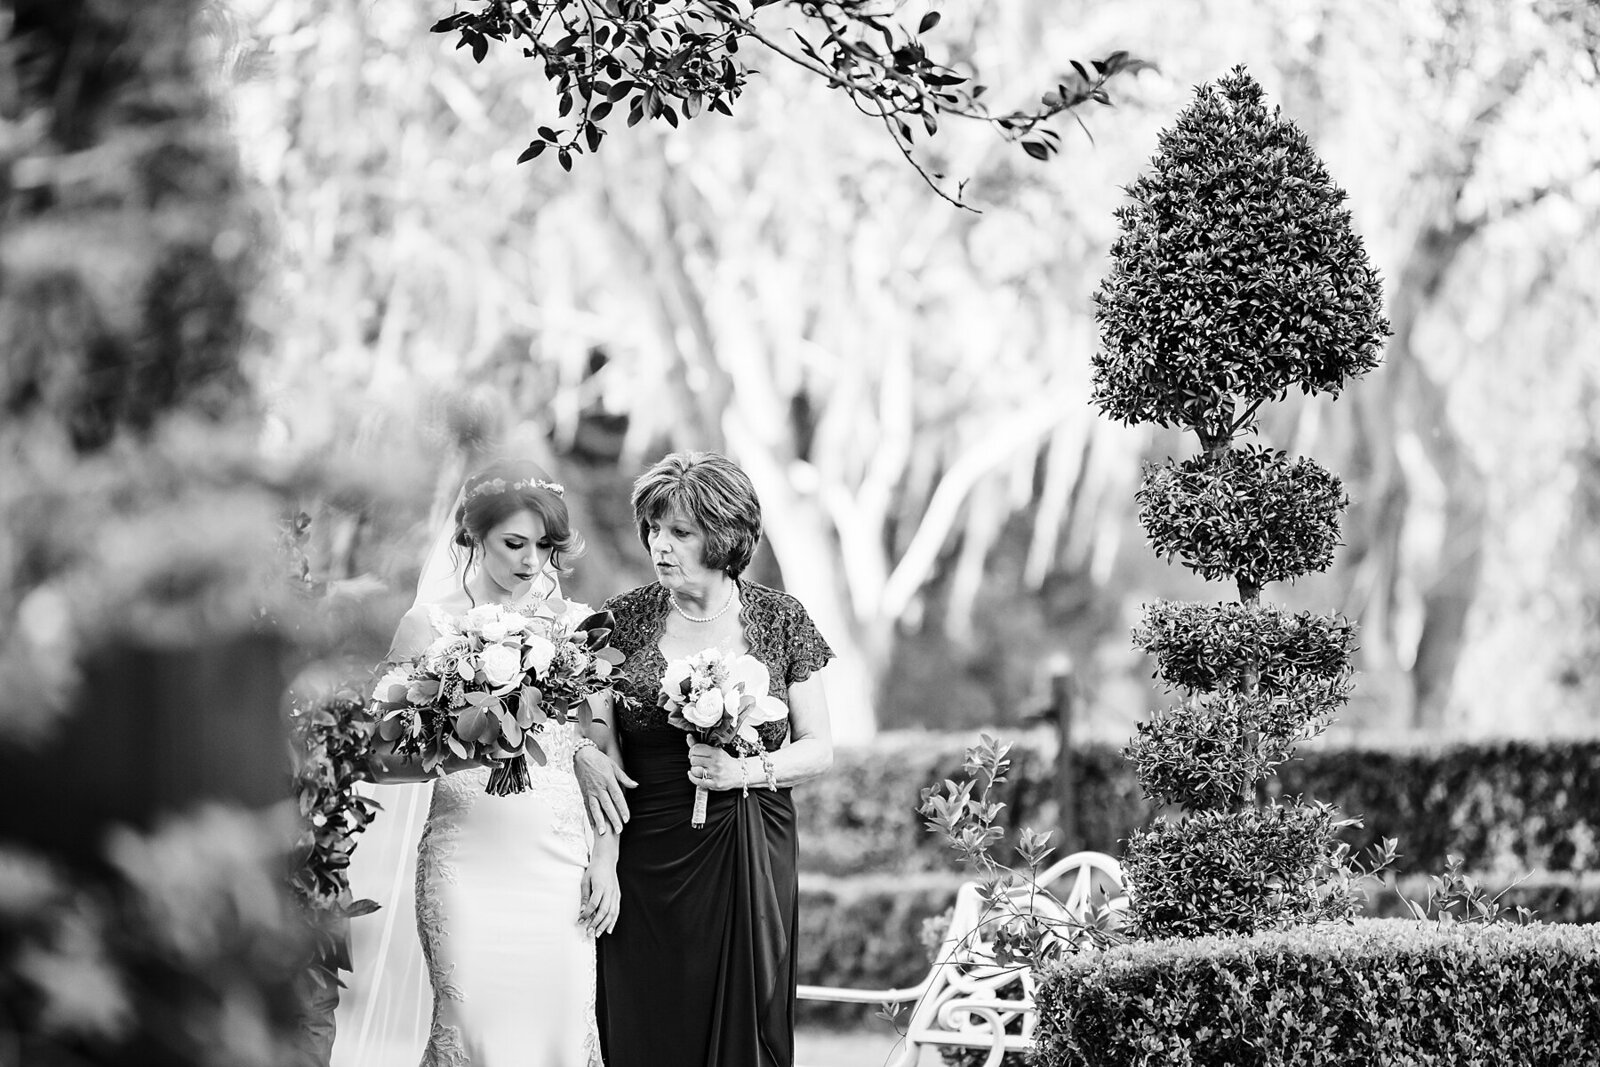 Emotional Wedding photos | Orlando Wedding Photographer | Chynna Pacheco Photography